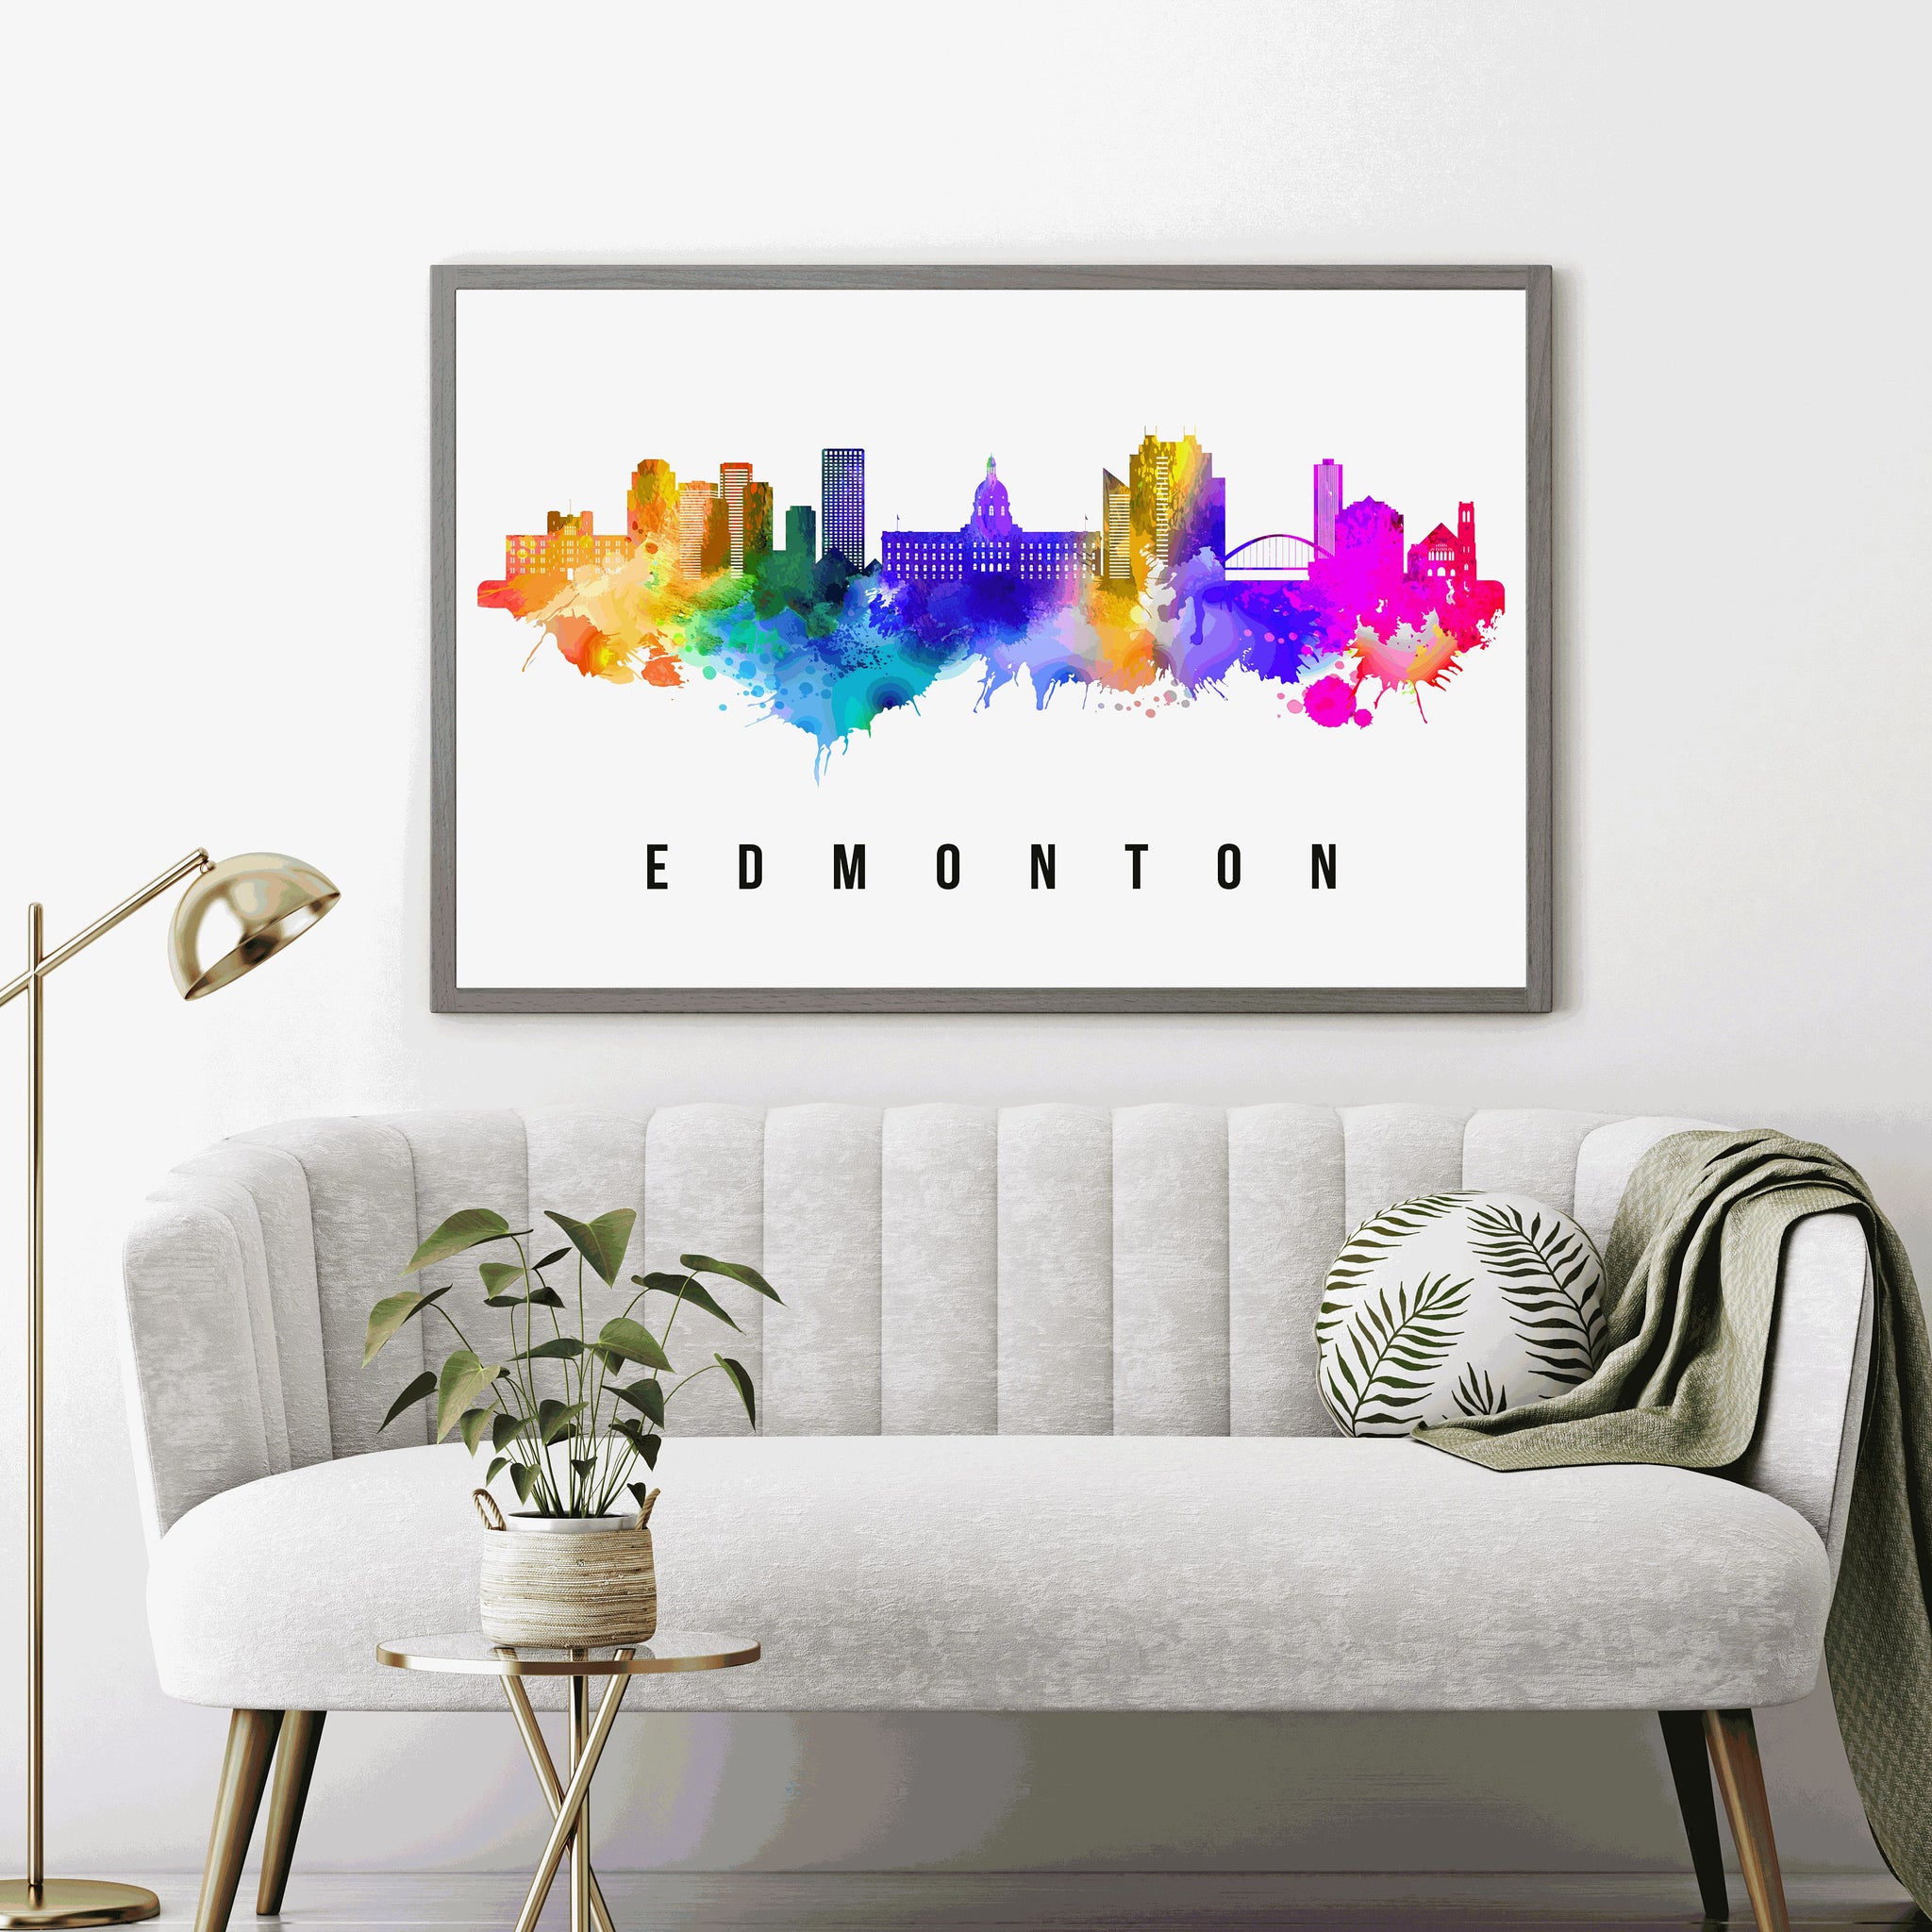 EDMONTON - CANADA Poster,  Skyline Poster Cityscape and Landmark Edmonton Illustration Home Wall Art, Office Decor